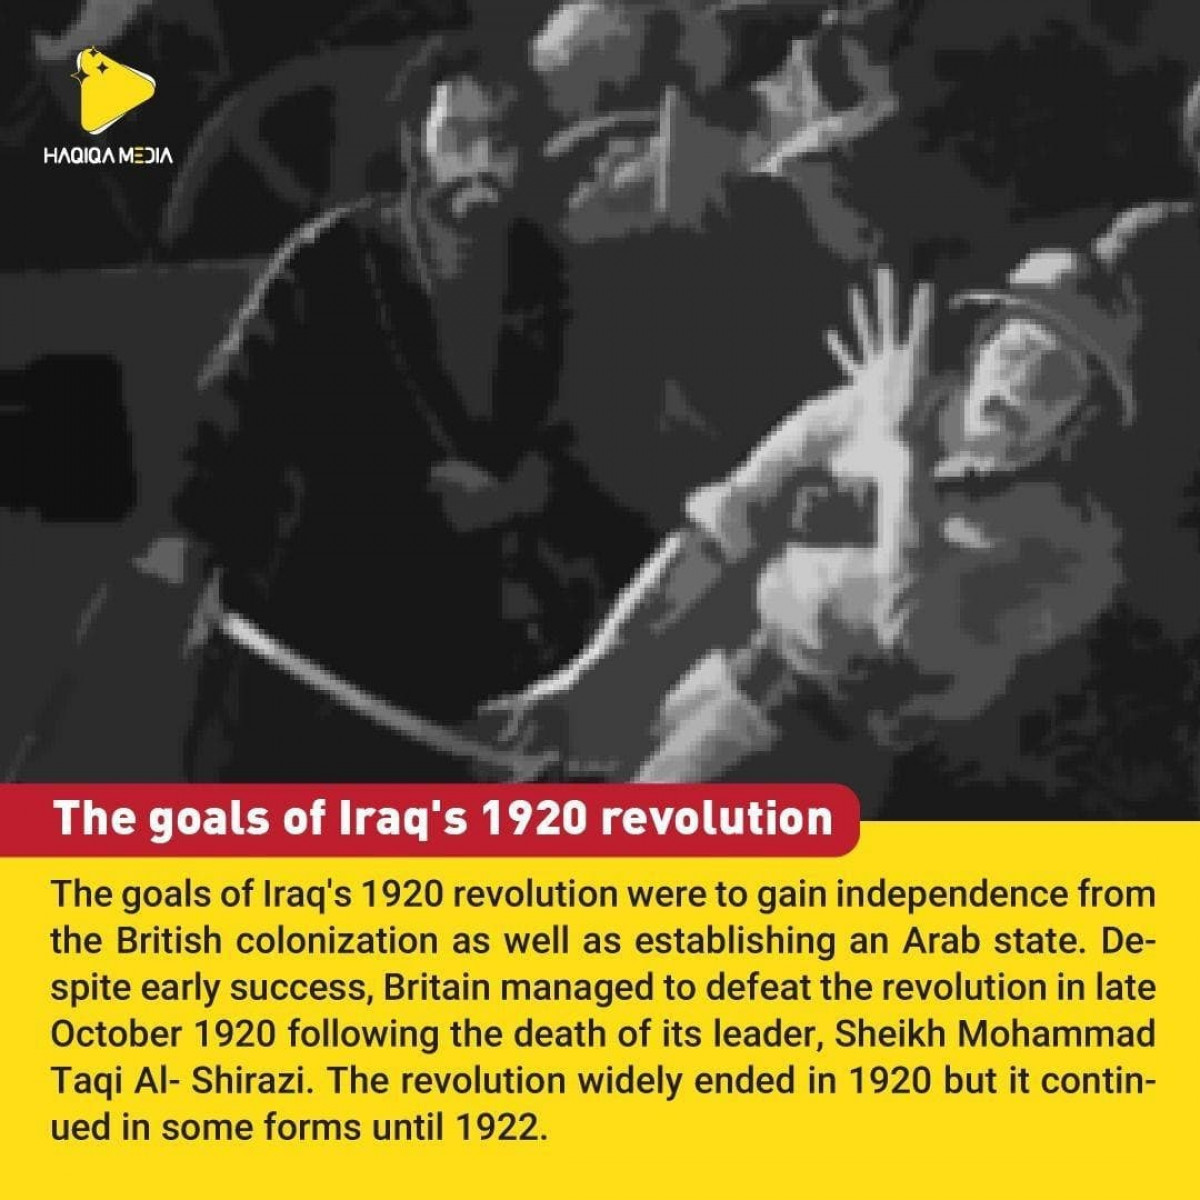 The goals of Iraq's